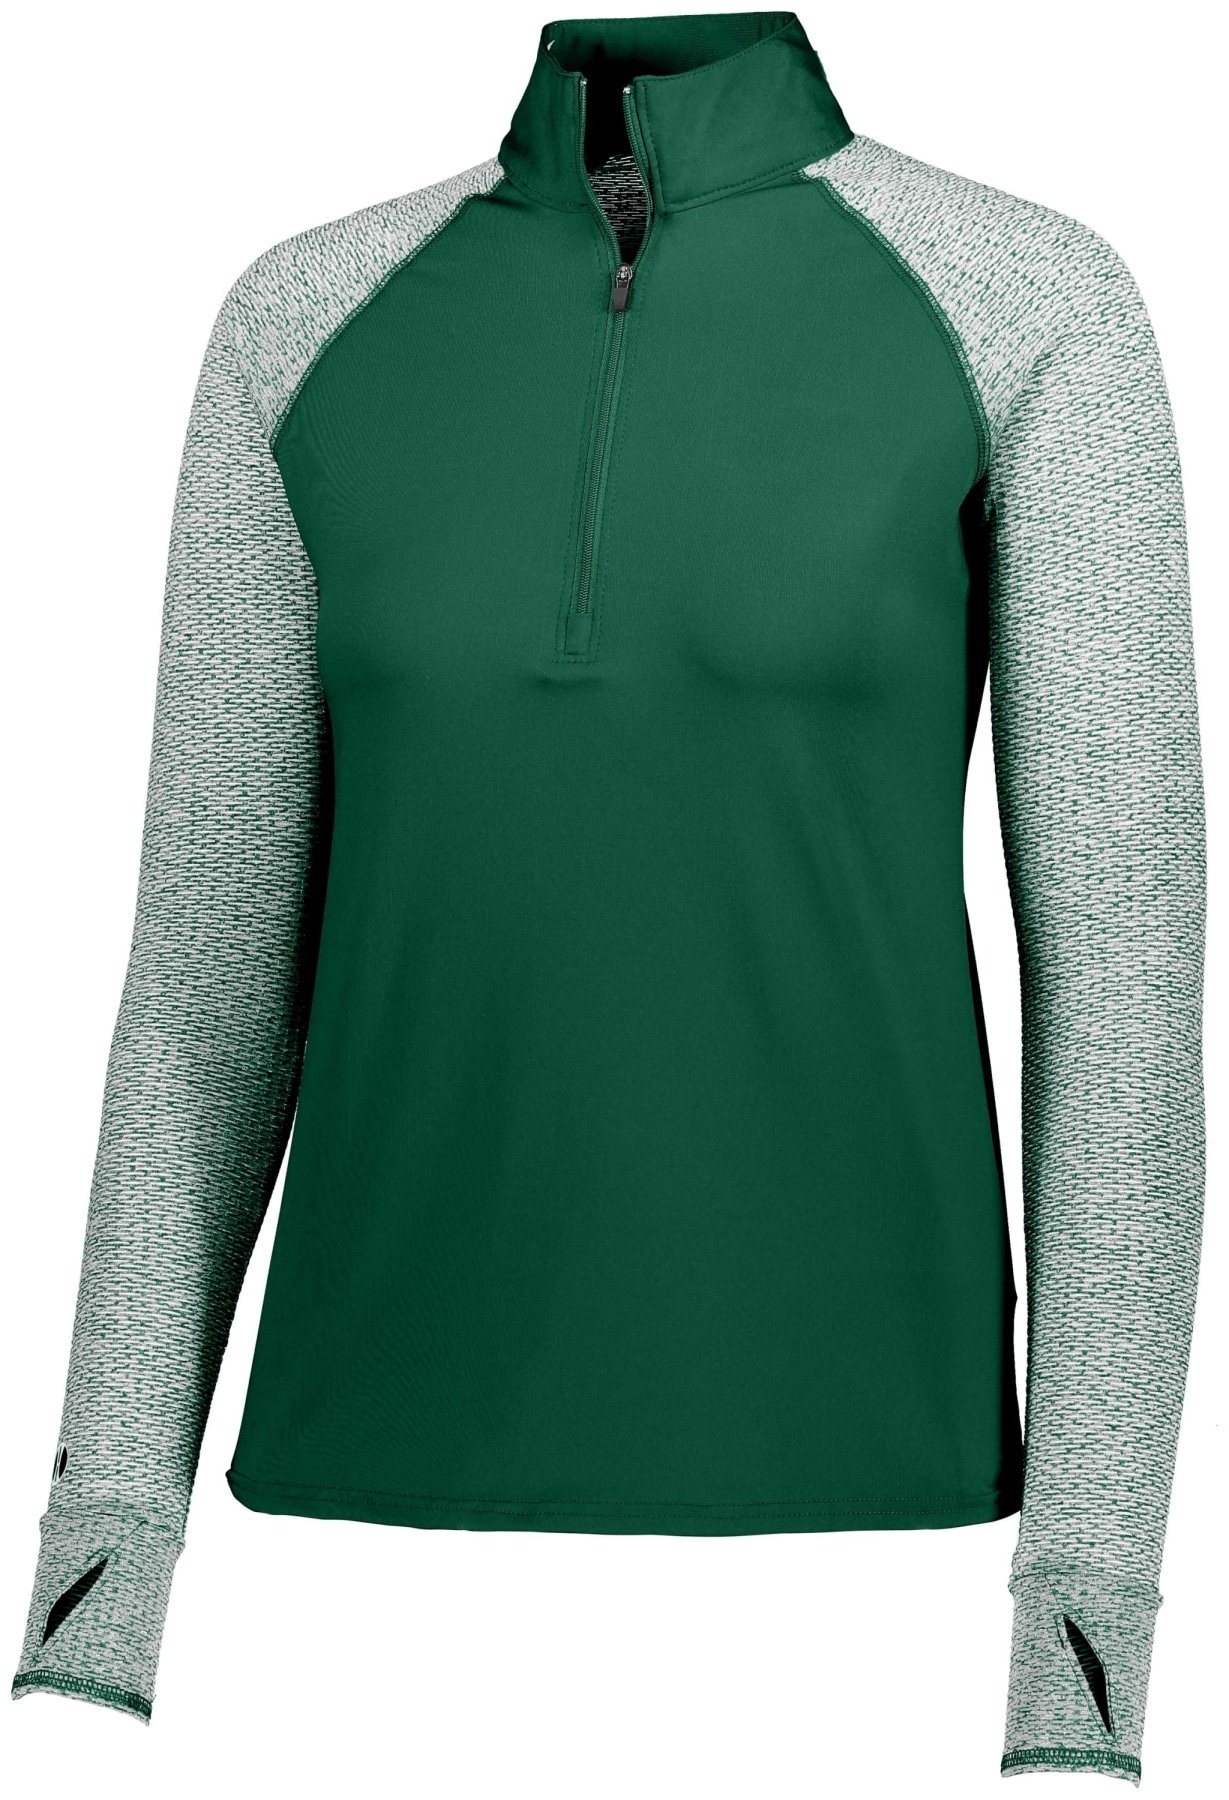 Ladies Athletic Shirt, Long Sleeve Axis 1/2 Zip Pullover 46